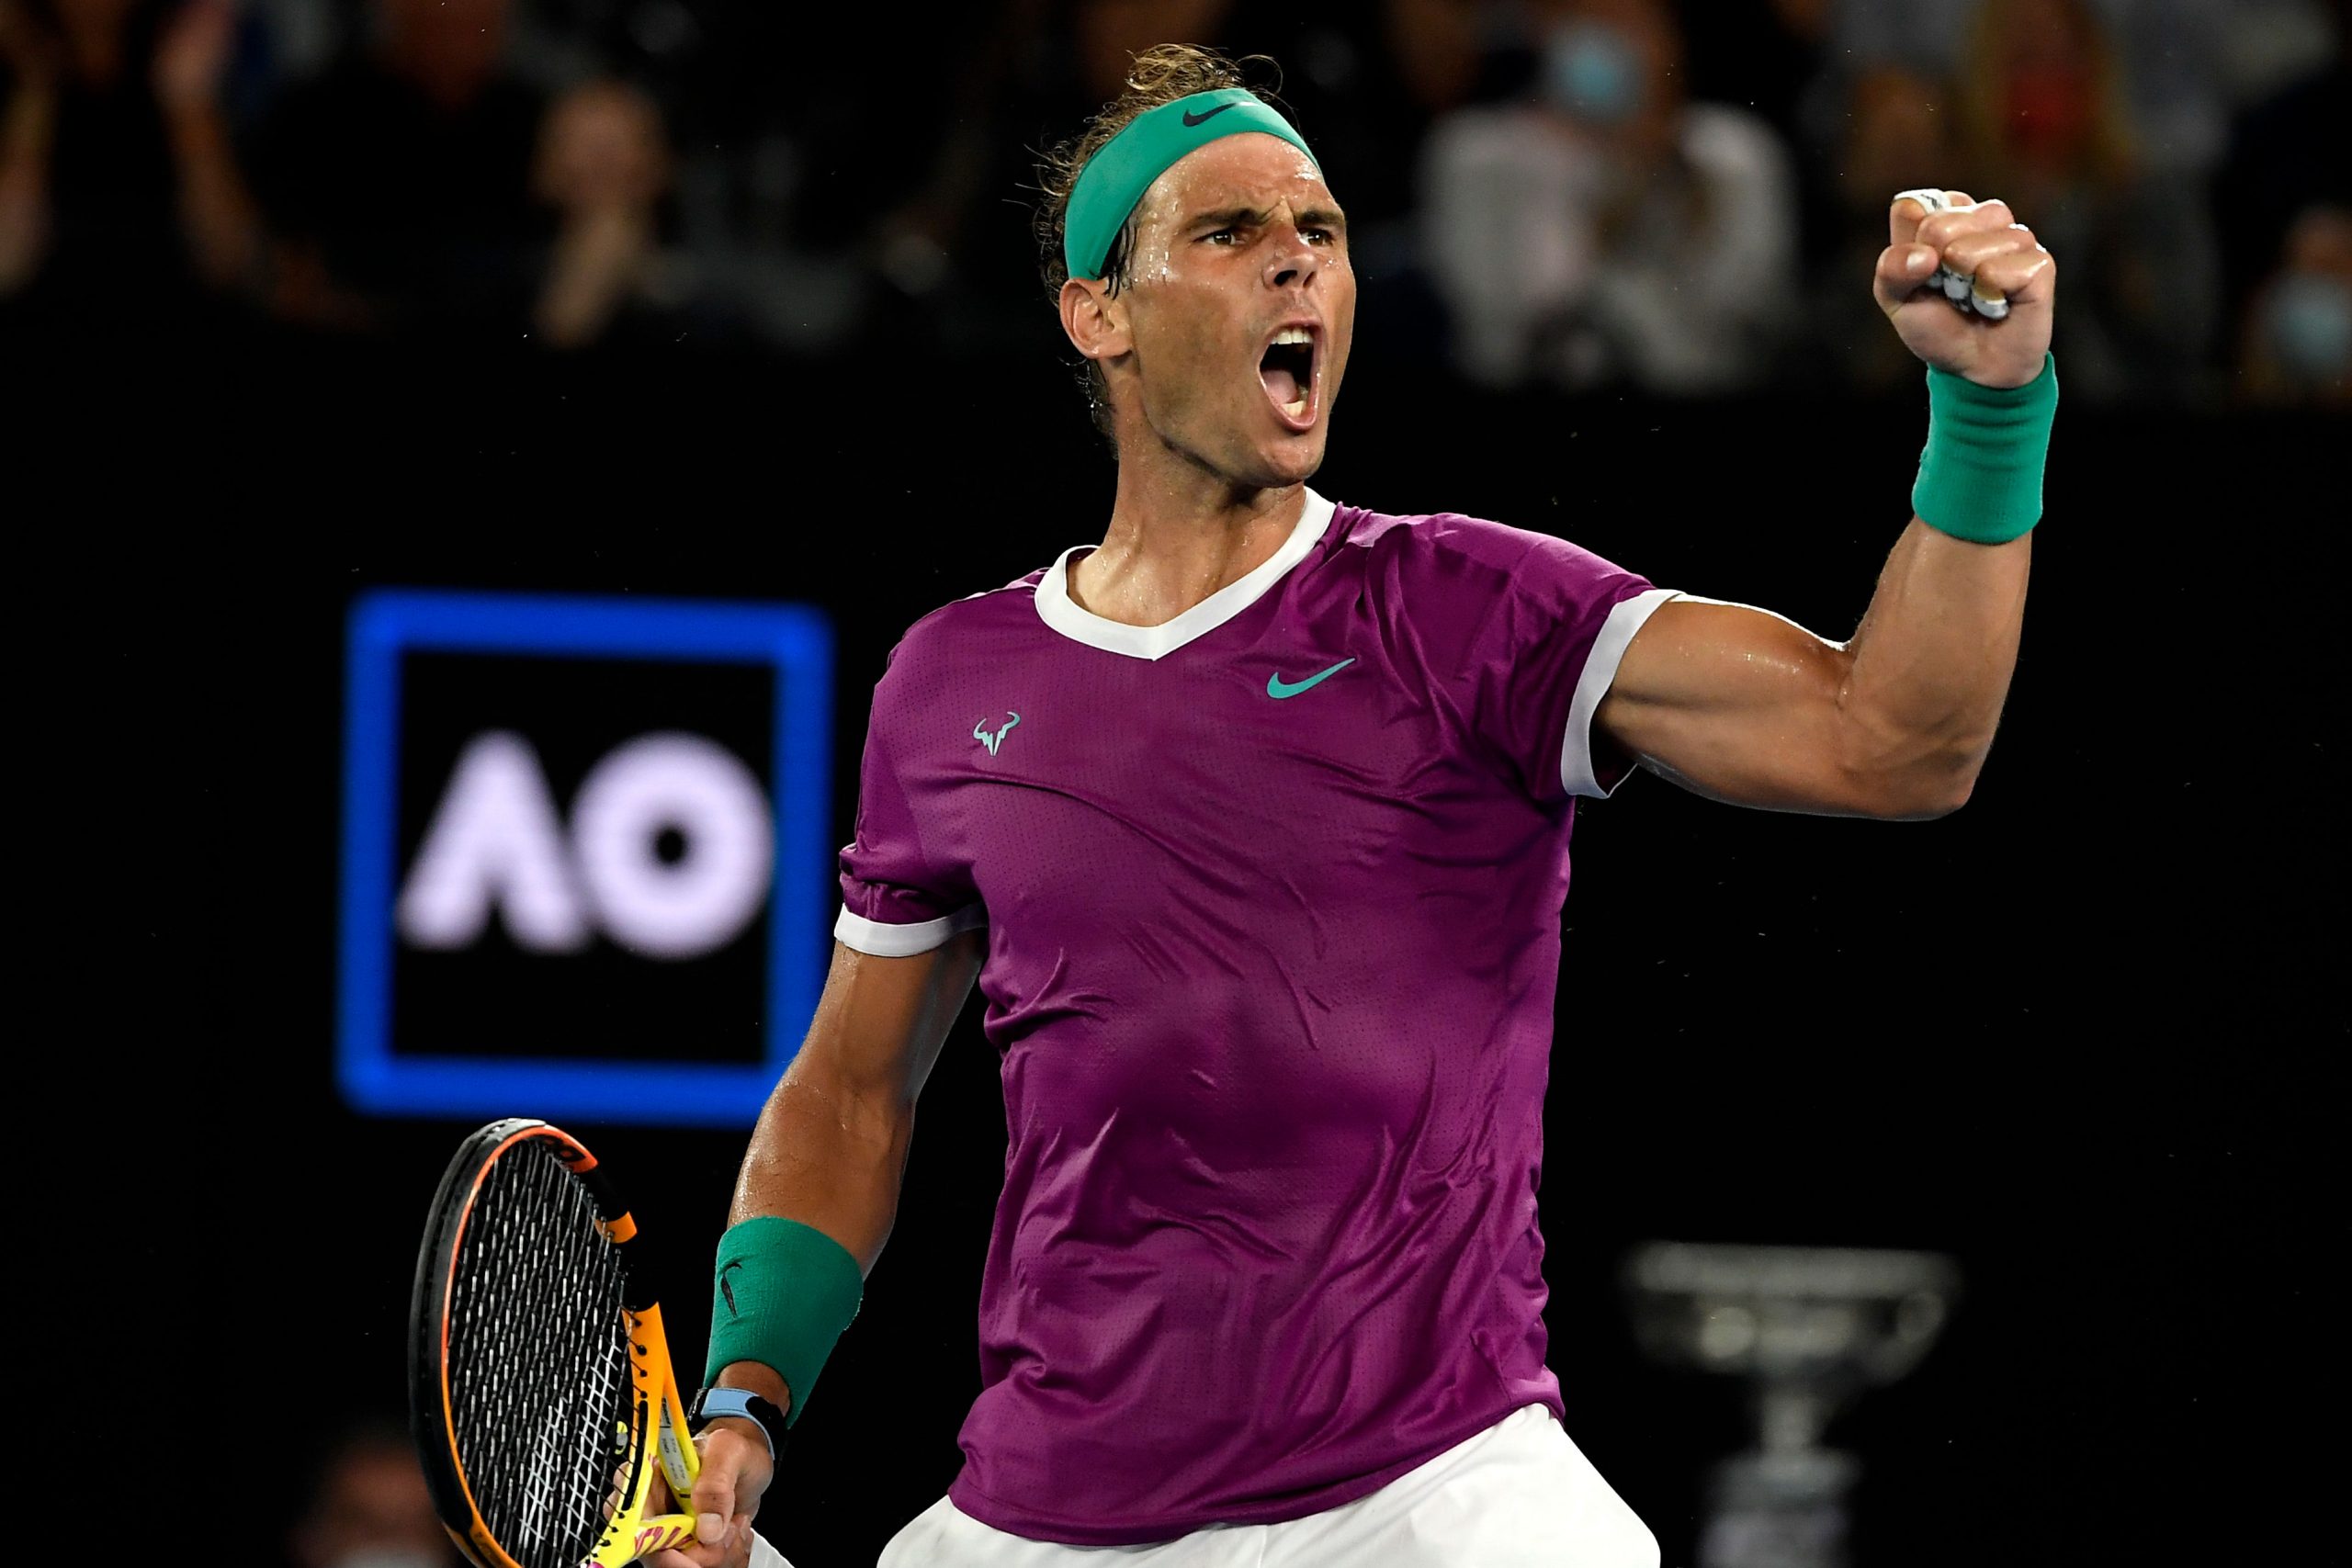 Rafael Nadal not satisfied with 21 Grand Slams, would love more majors